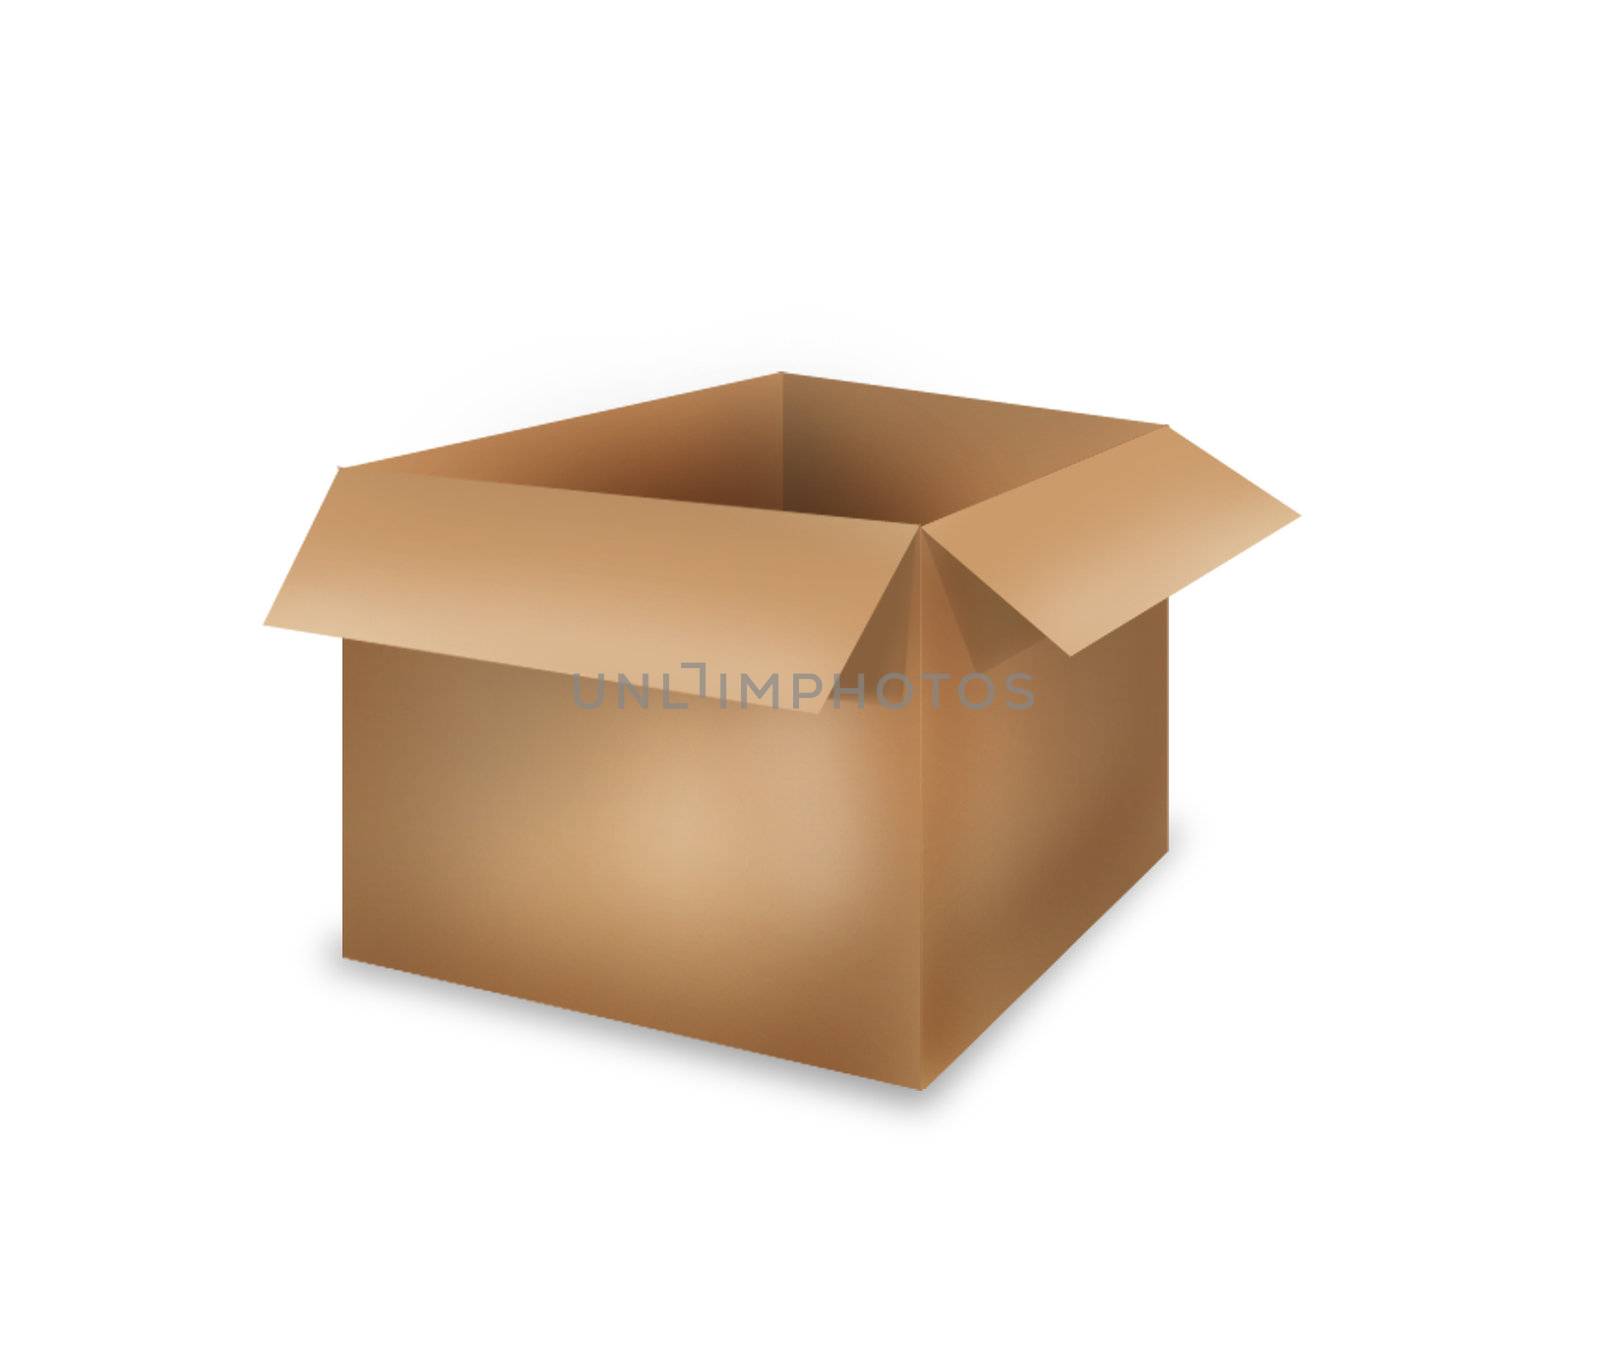 Cardboard Box by Imagevixen